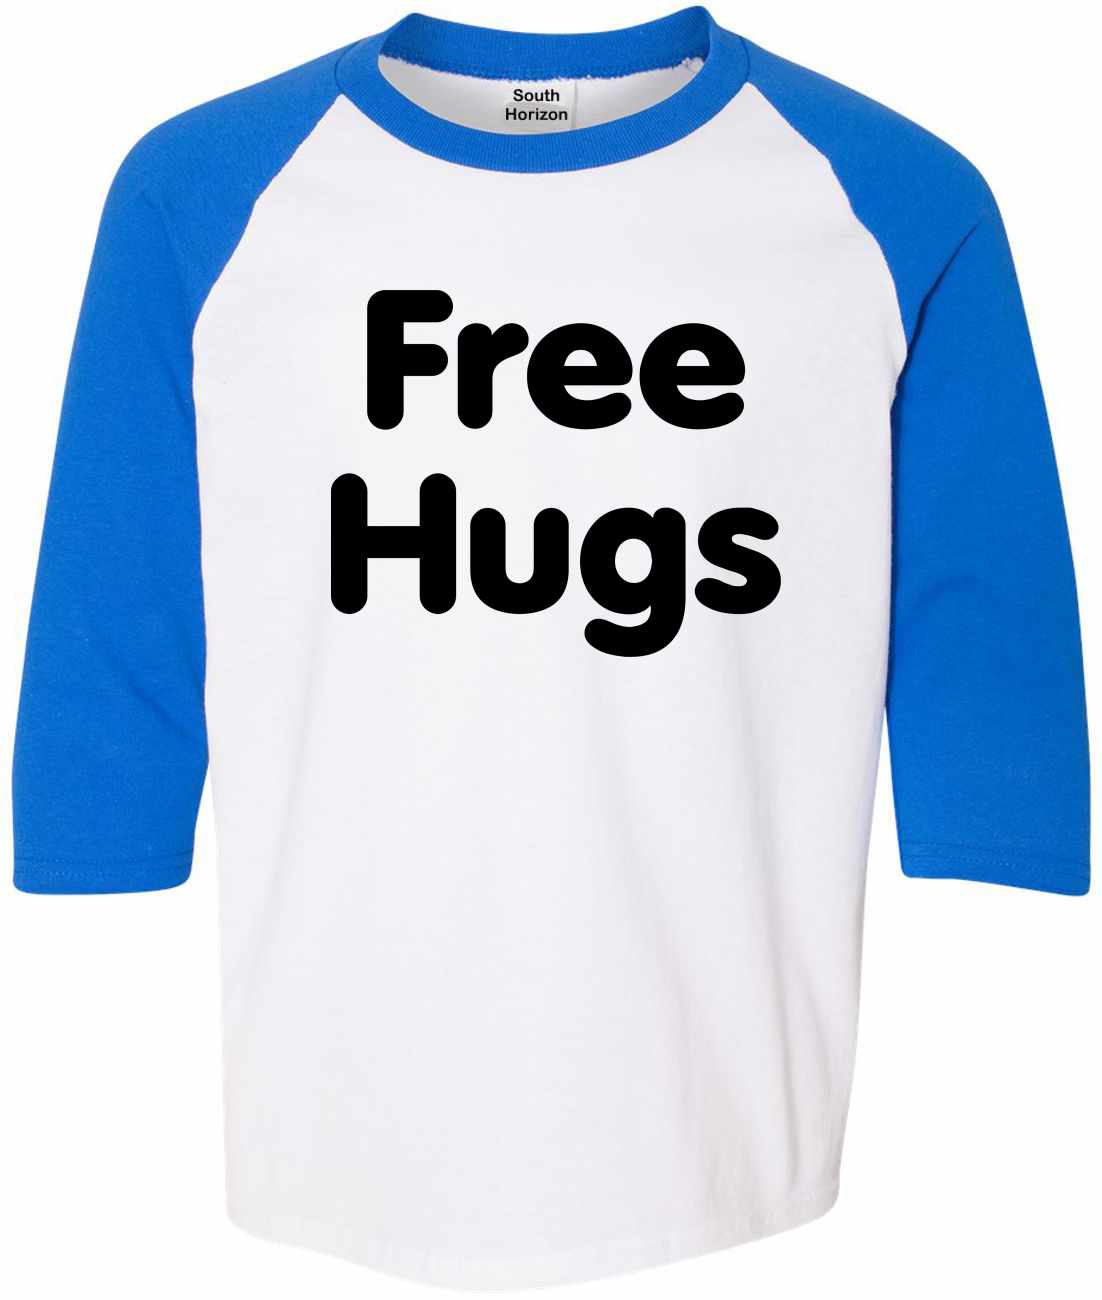 FREE HUGS on Youth Baseball Shirt